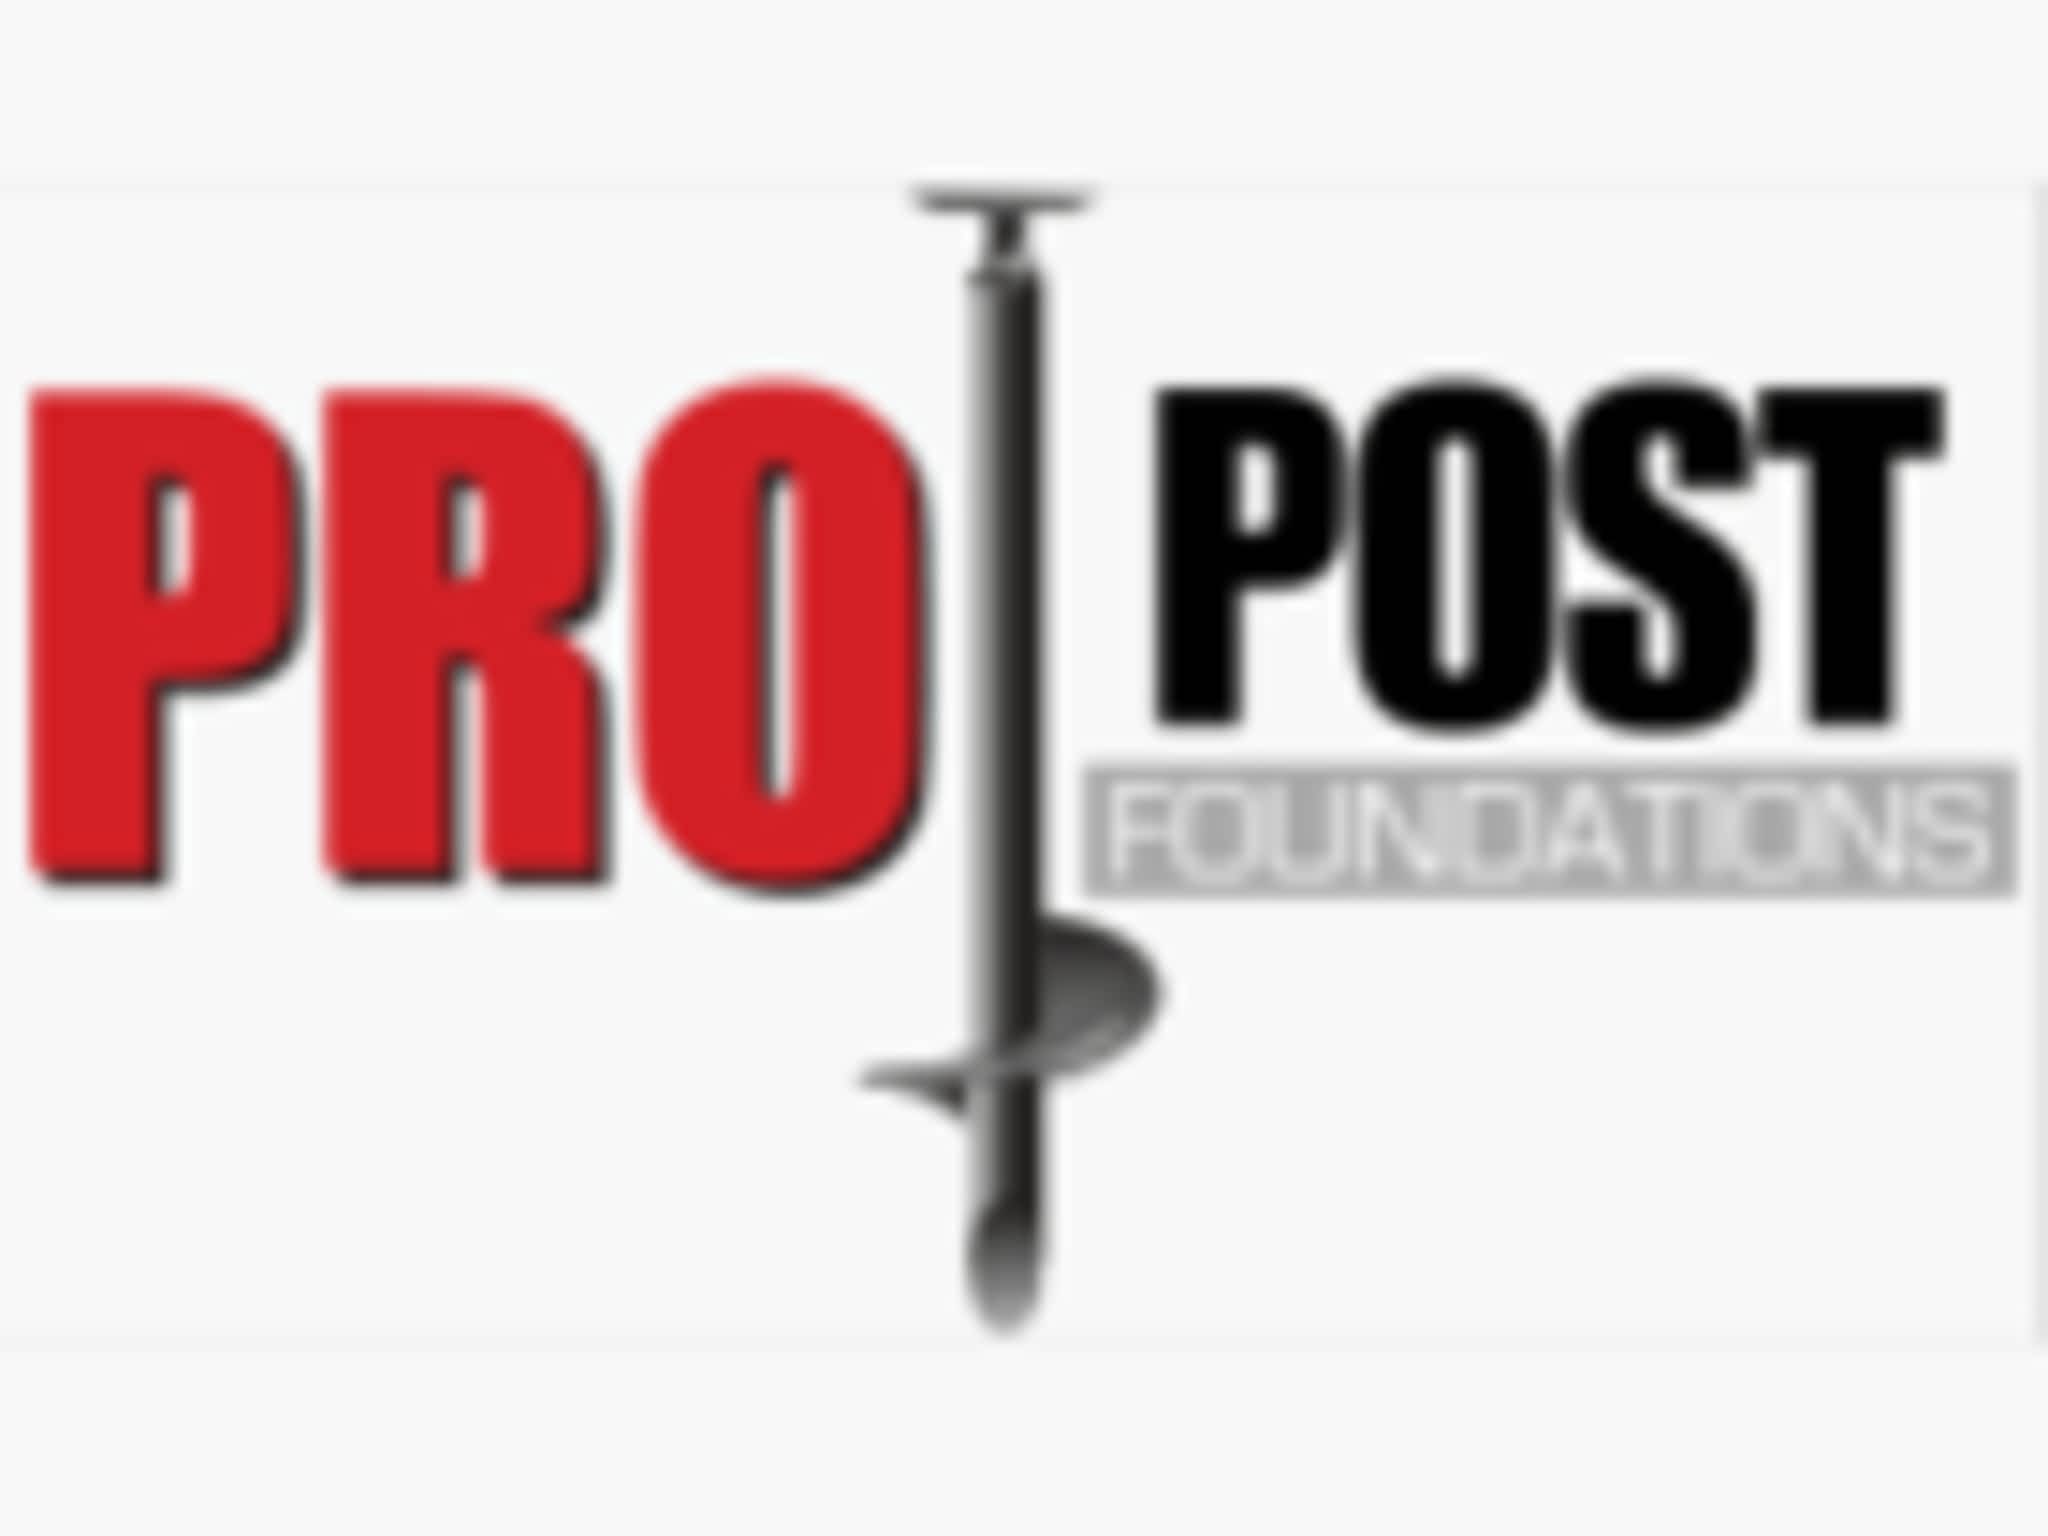 photo Pro Post Foundations